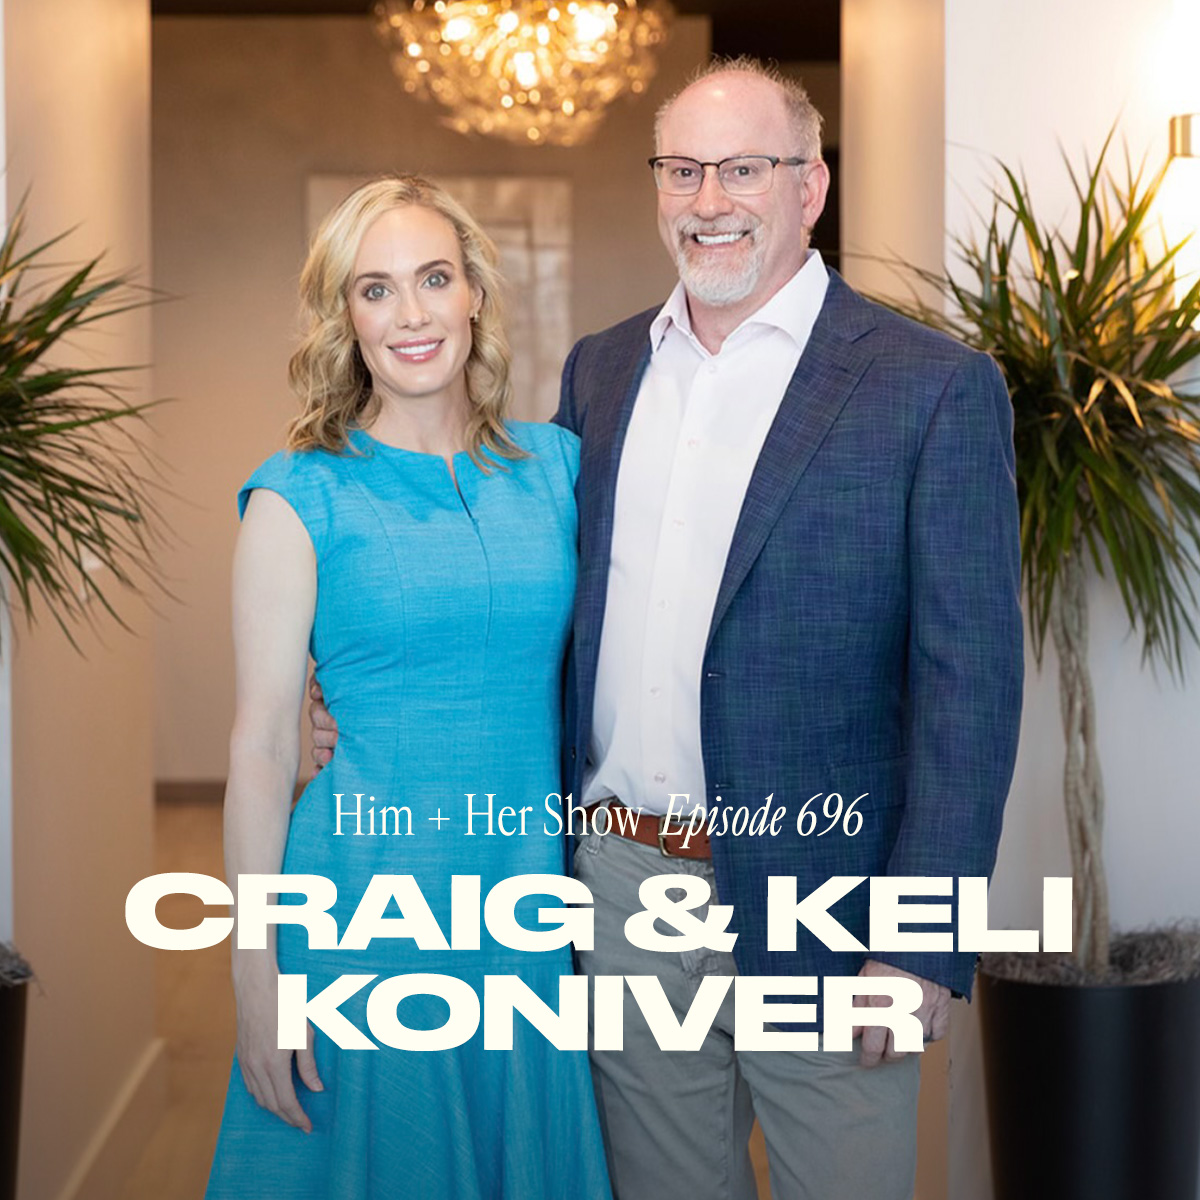 Dr. Craig and Kelli Koniver